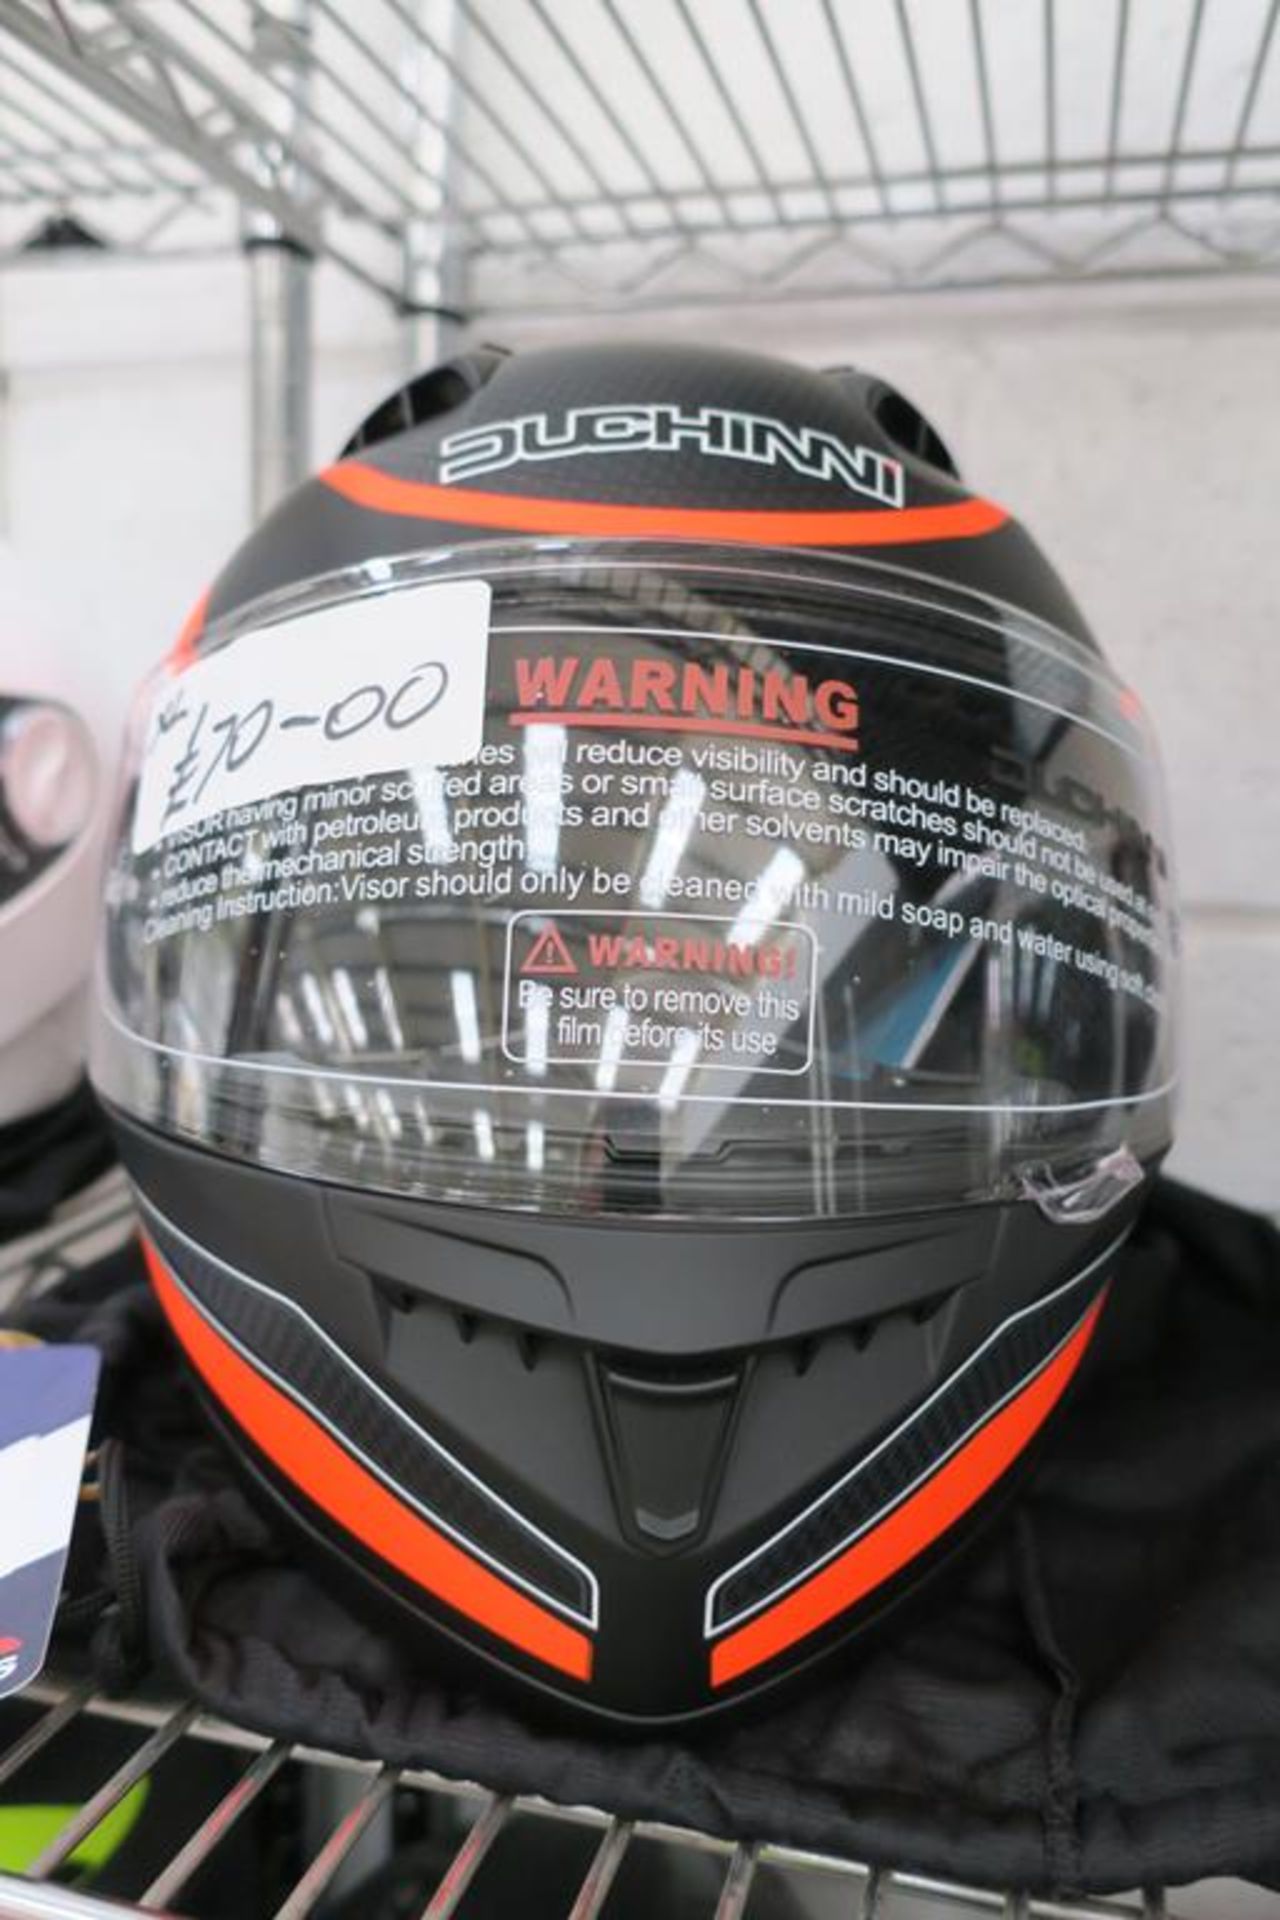 Duchinni YH-FF968 Size XL Helmet comes with Duchinni Bag - Image 2 of 3